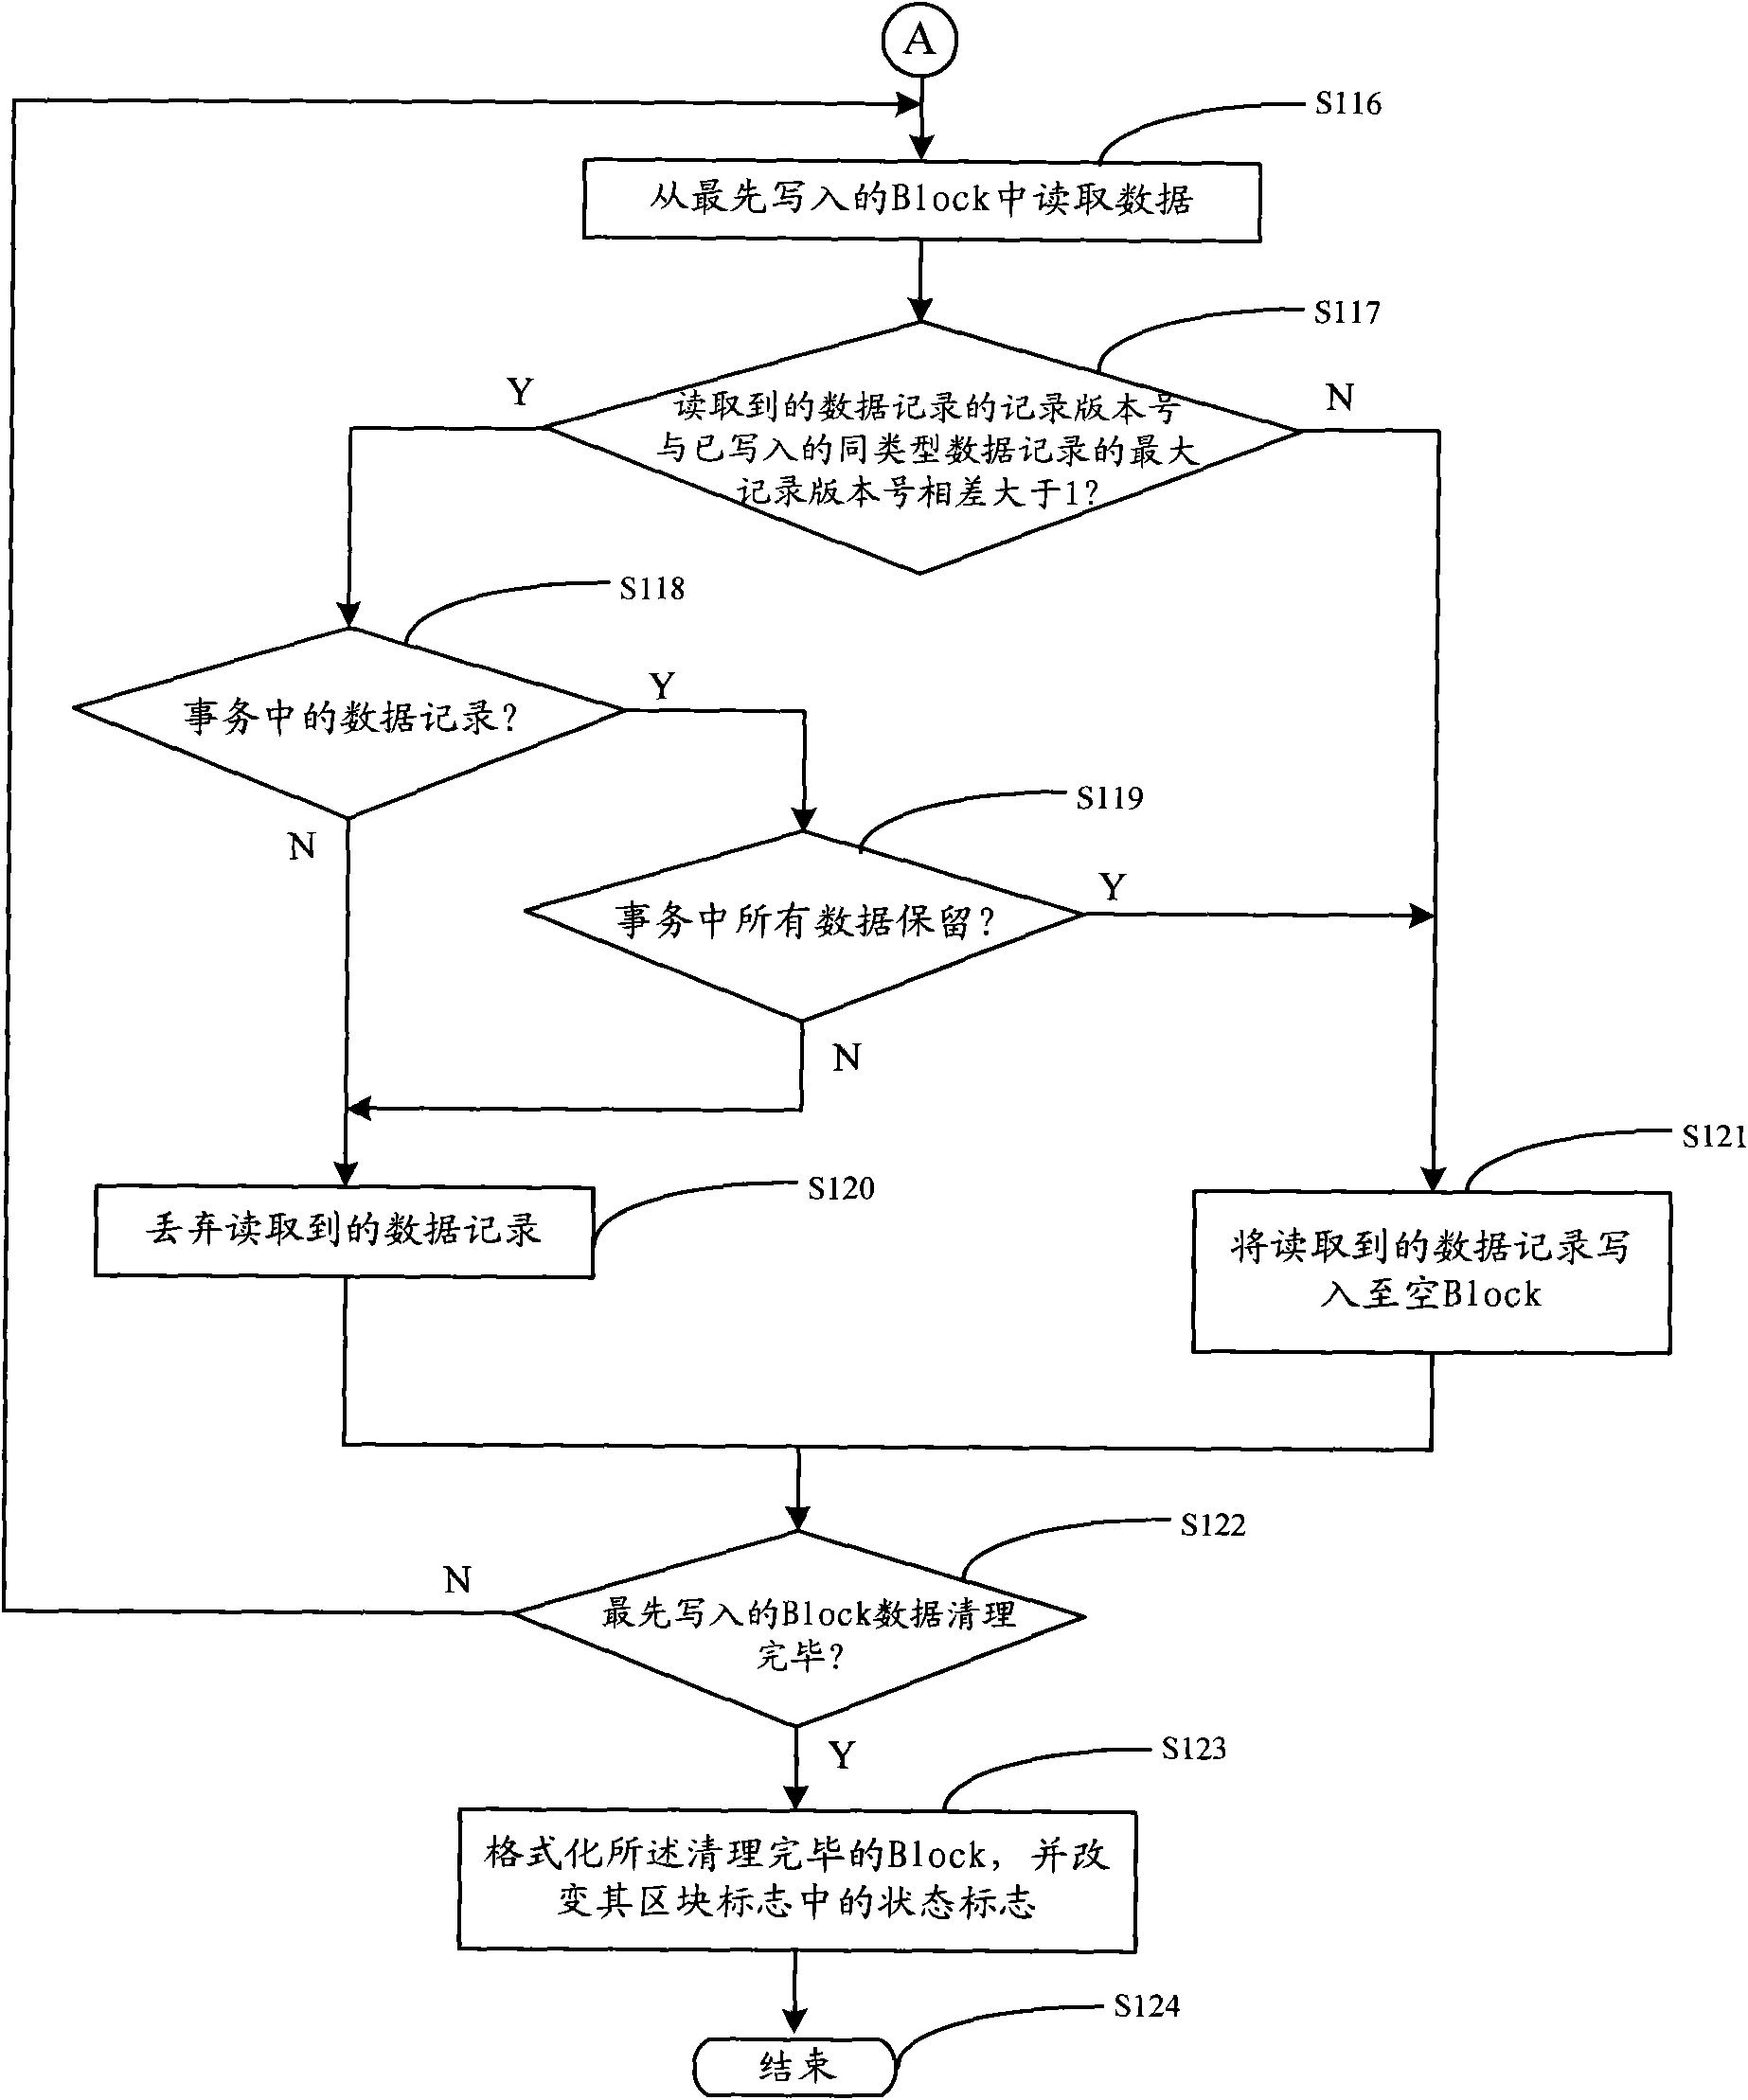 Business processing method based on Flash